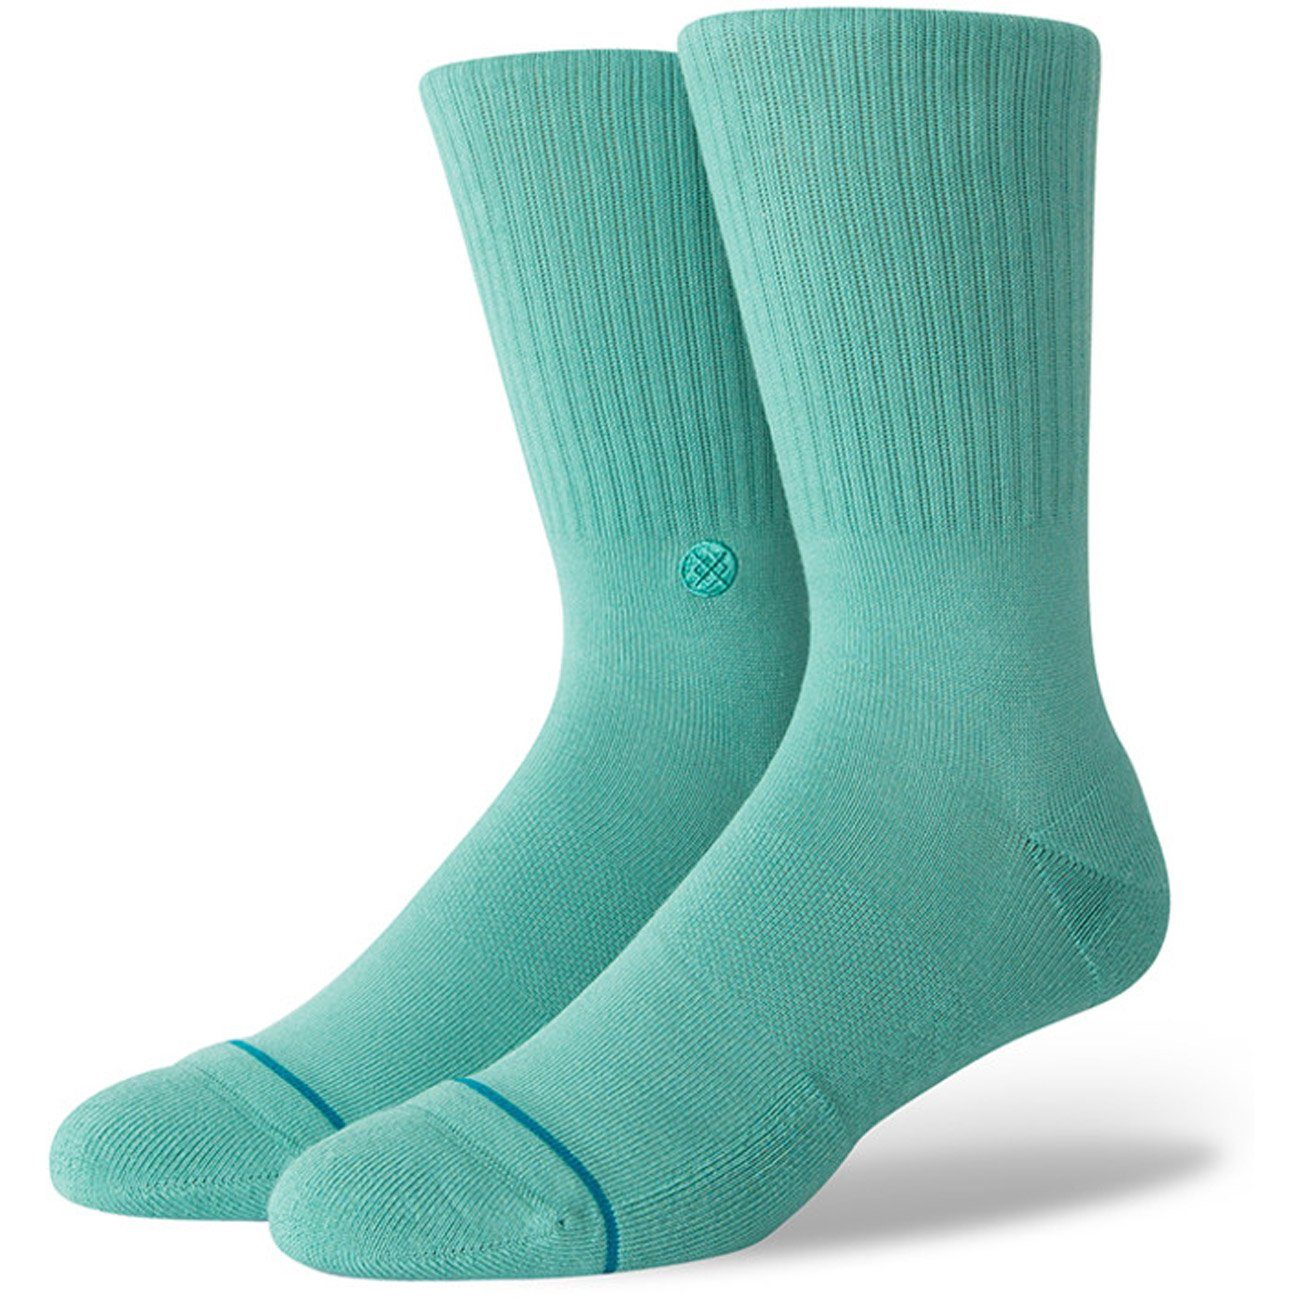 Stance Socken ICON turquoise | Socken